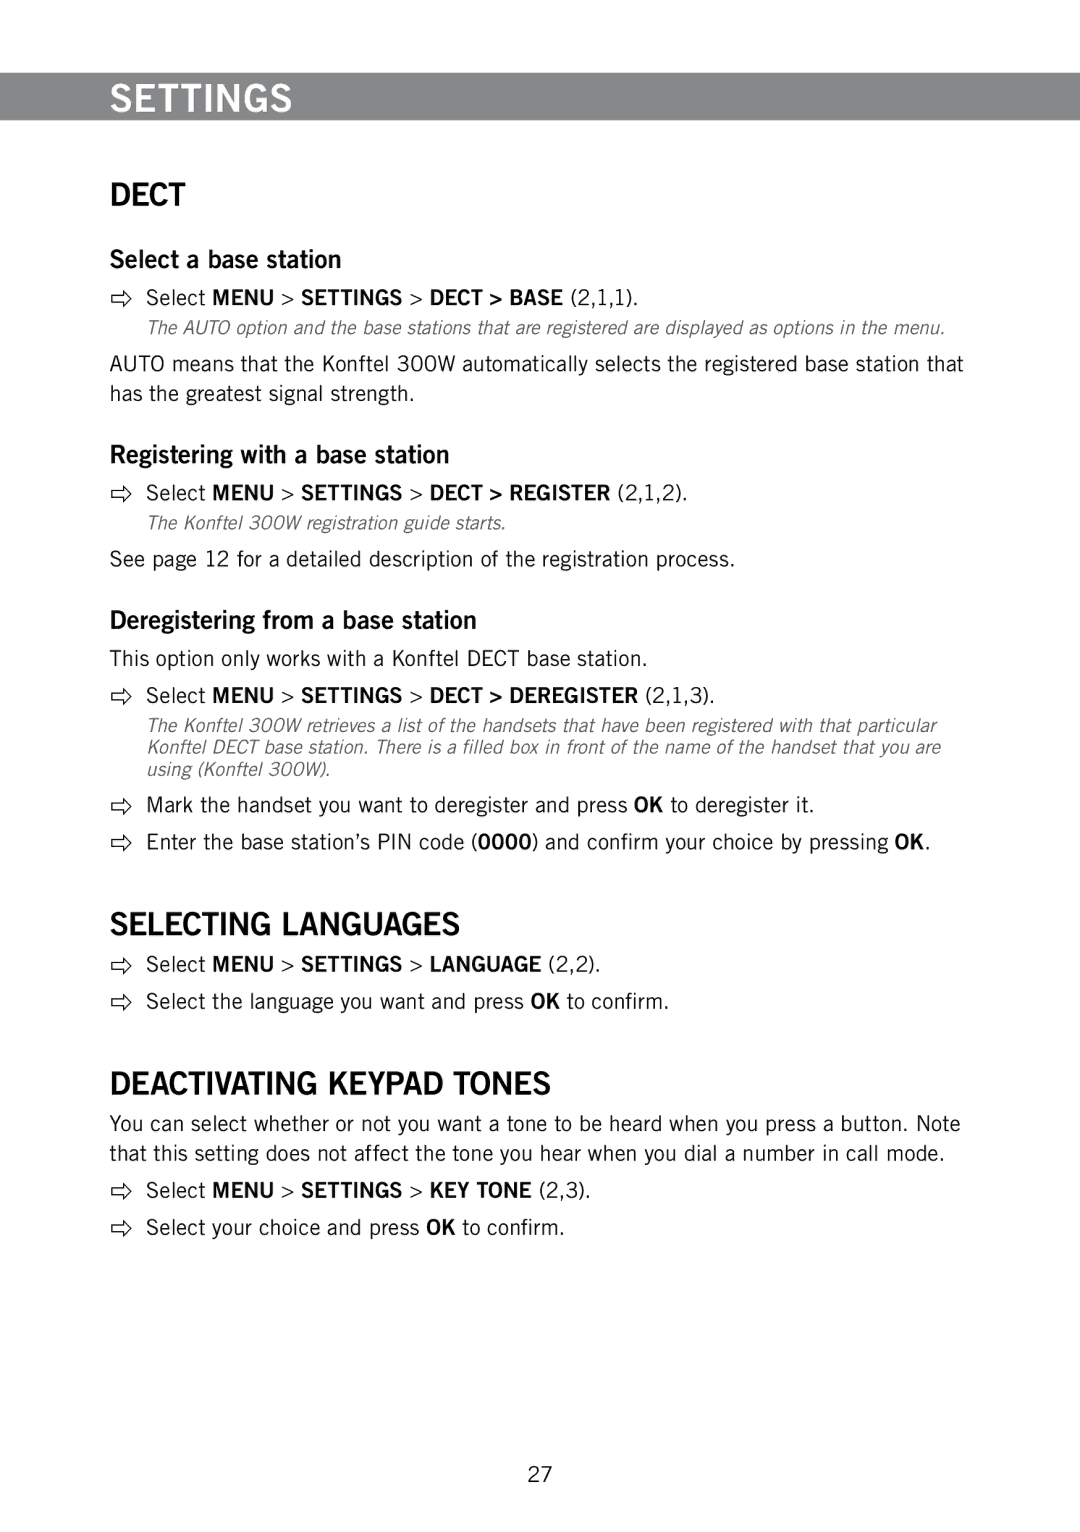 Konftel 300W manual Settings, Dect, Selecting Languages, Deactivating Keypad Tones 